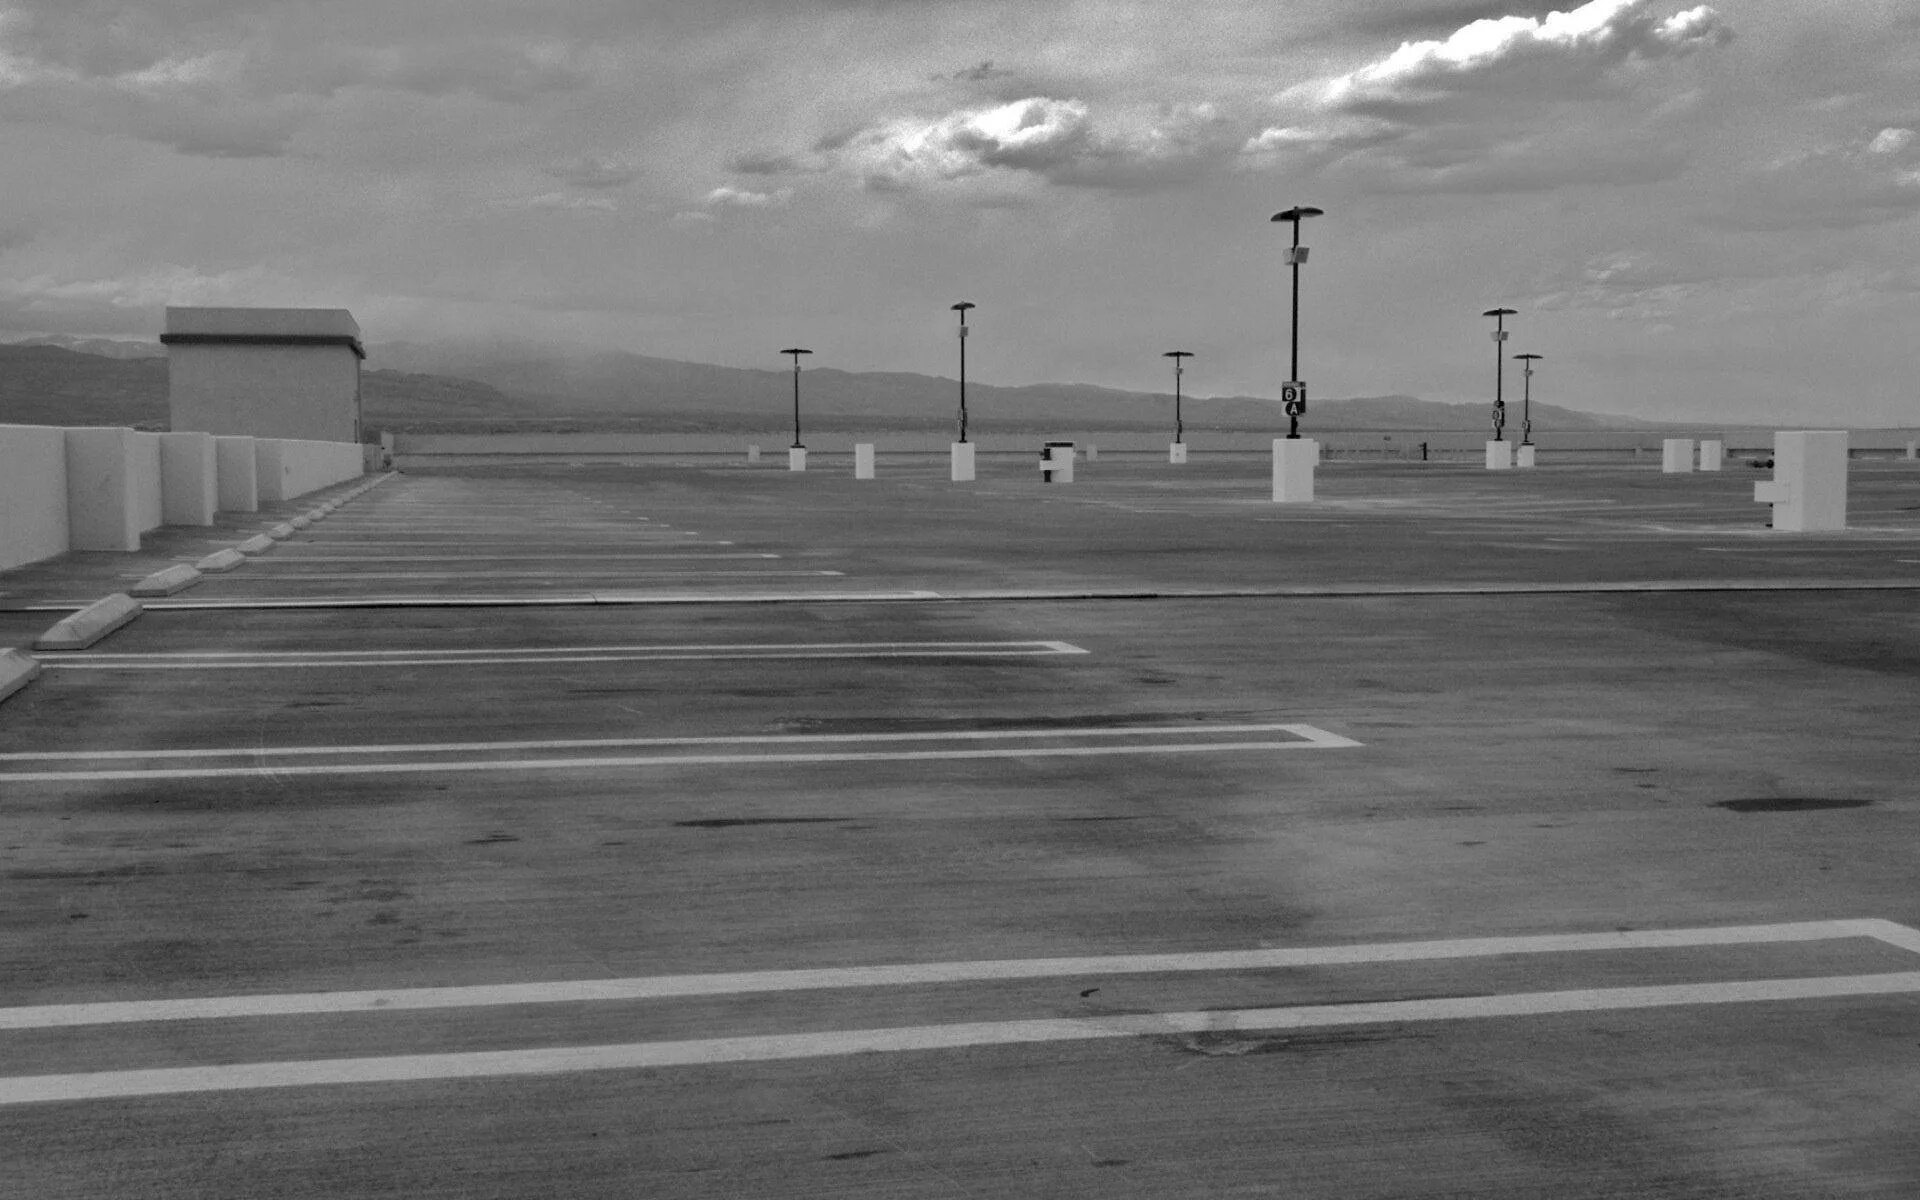 More parking lots. Пустая стоянка. Пустая парковка. Парк стоянка пустая. Пустая стоянка на фоне города.